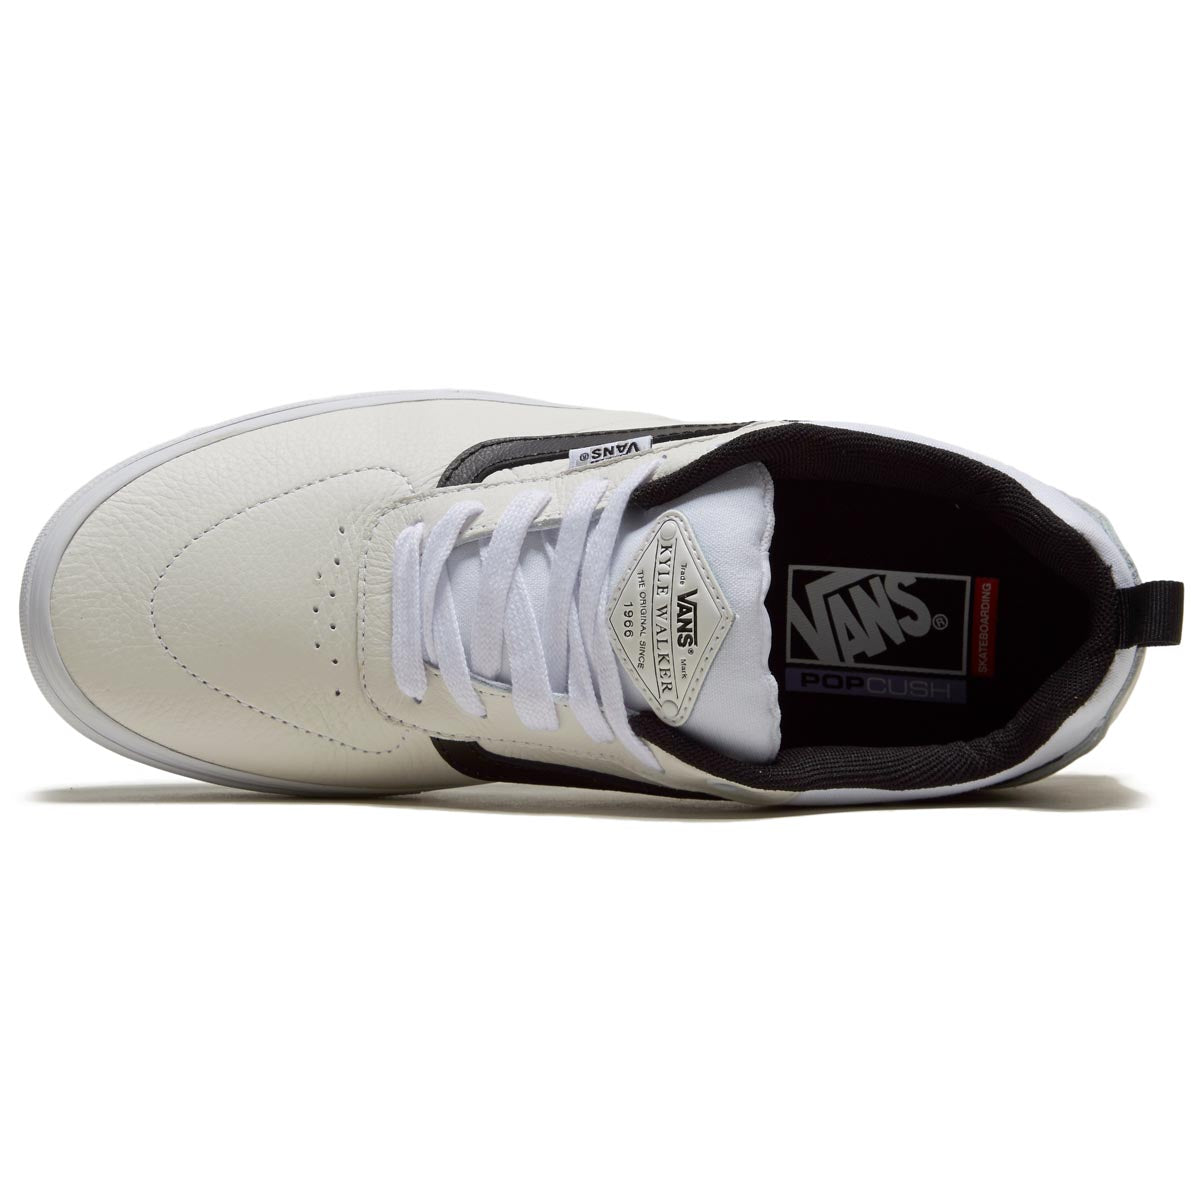 Vans Kyle Walker Shoes - Leather True White/Black image 3